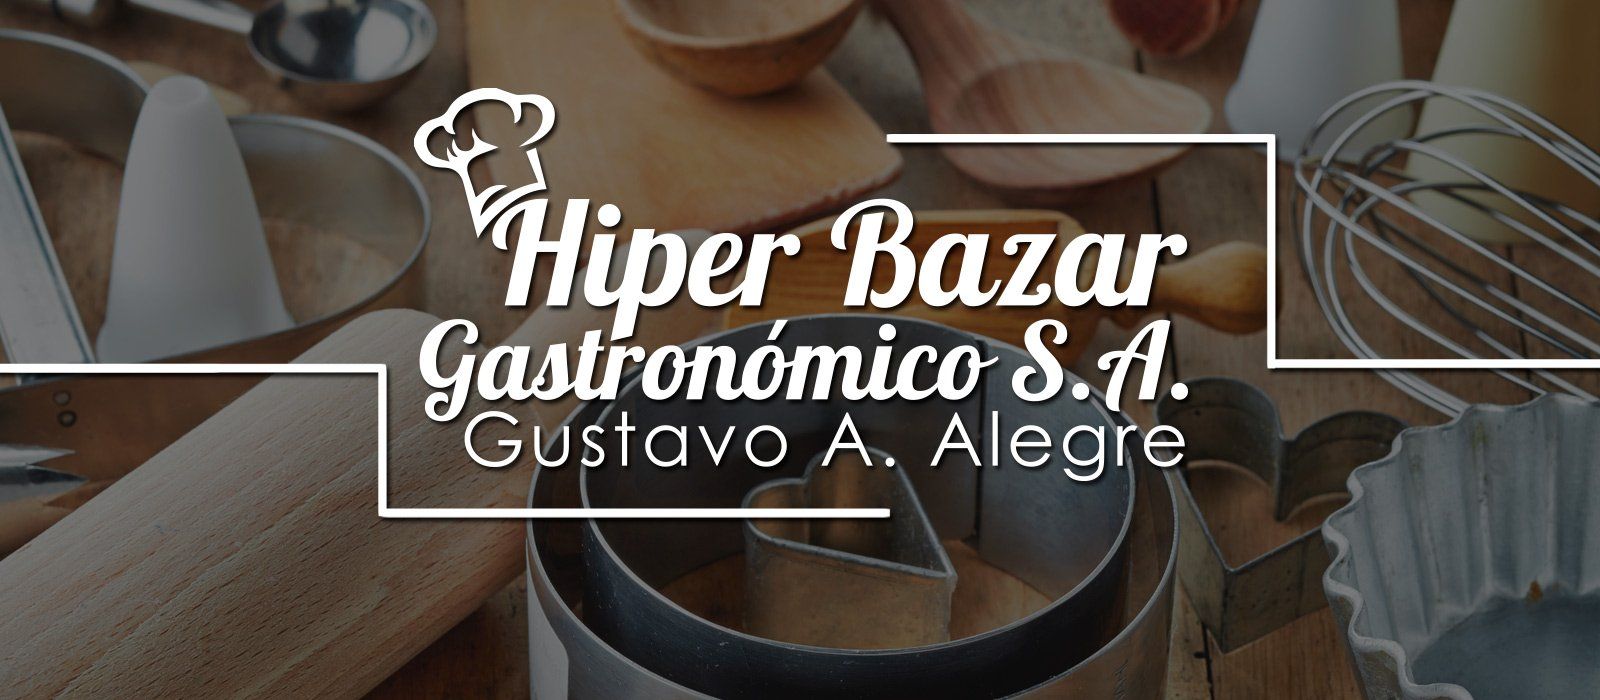 Hiper Bazar Gastronómico S.A. Gustavo A. Alegre